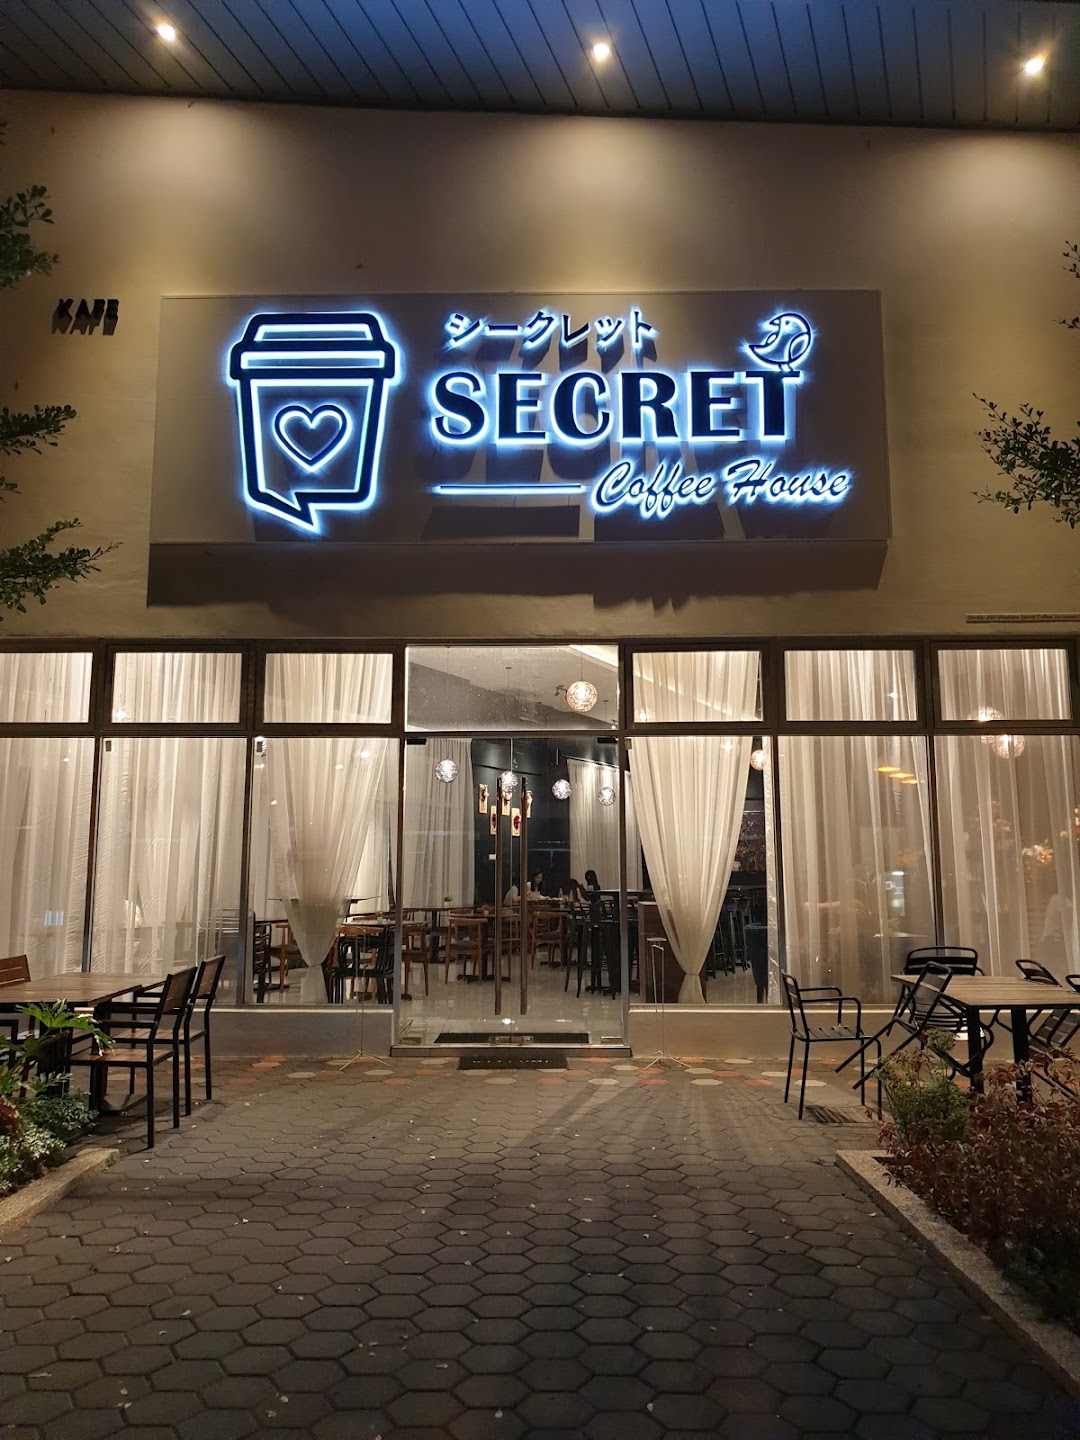 Secret coffee house